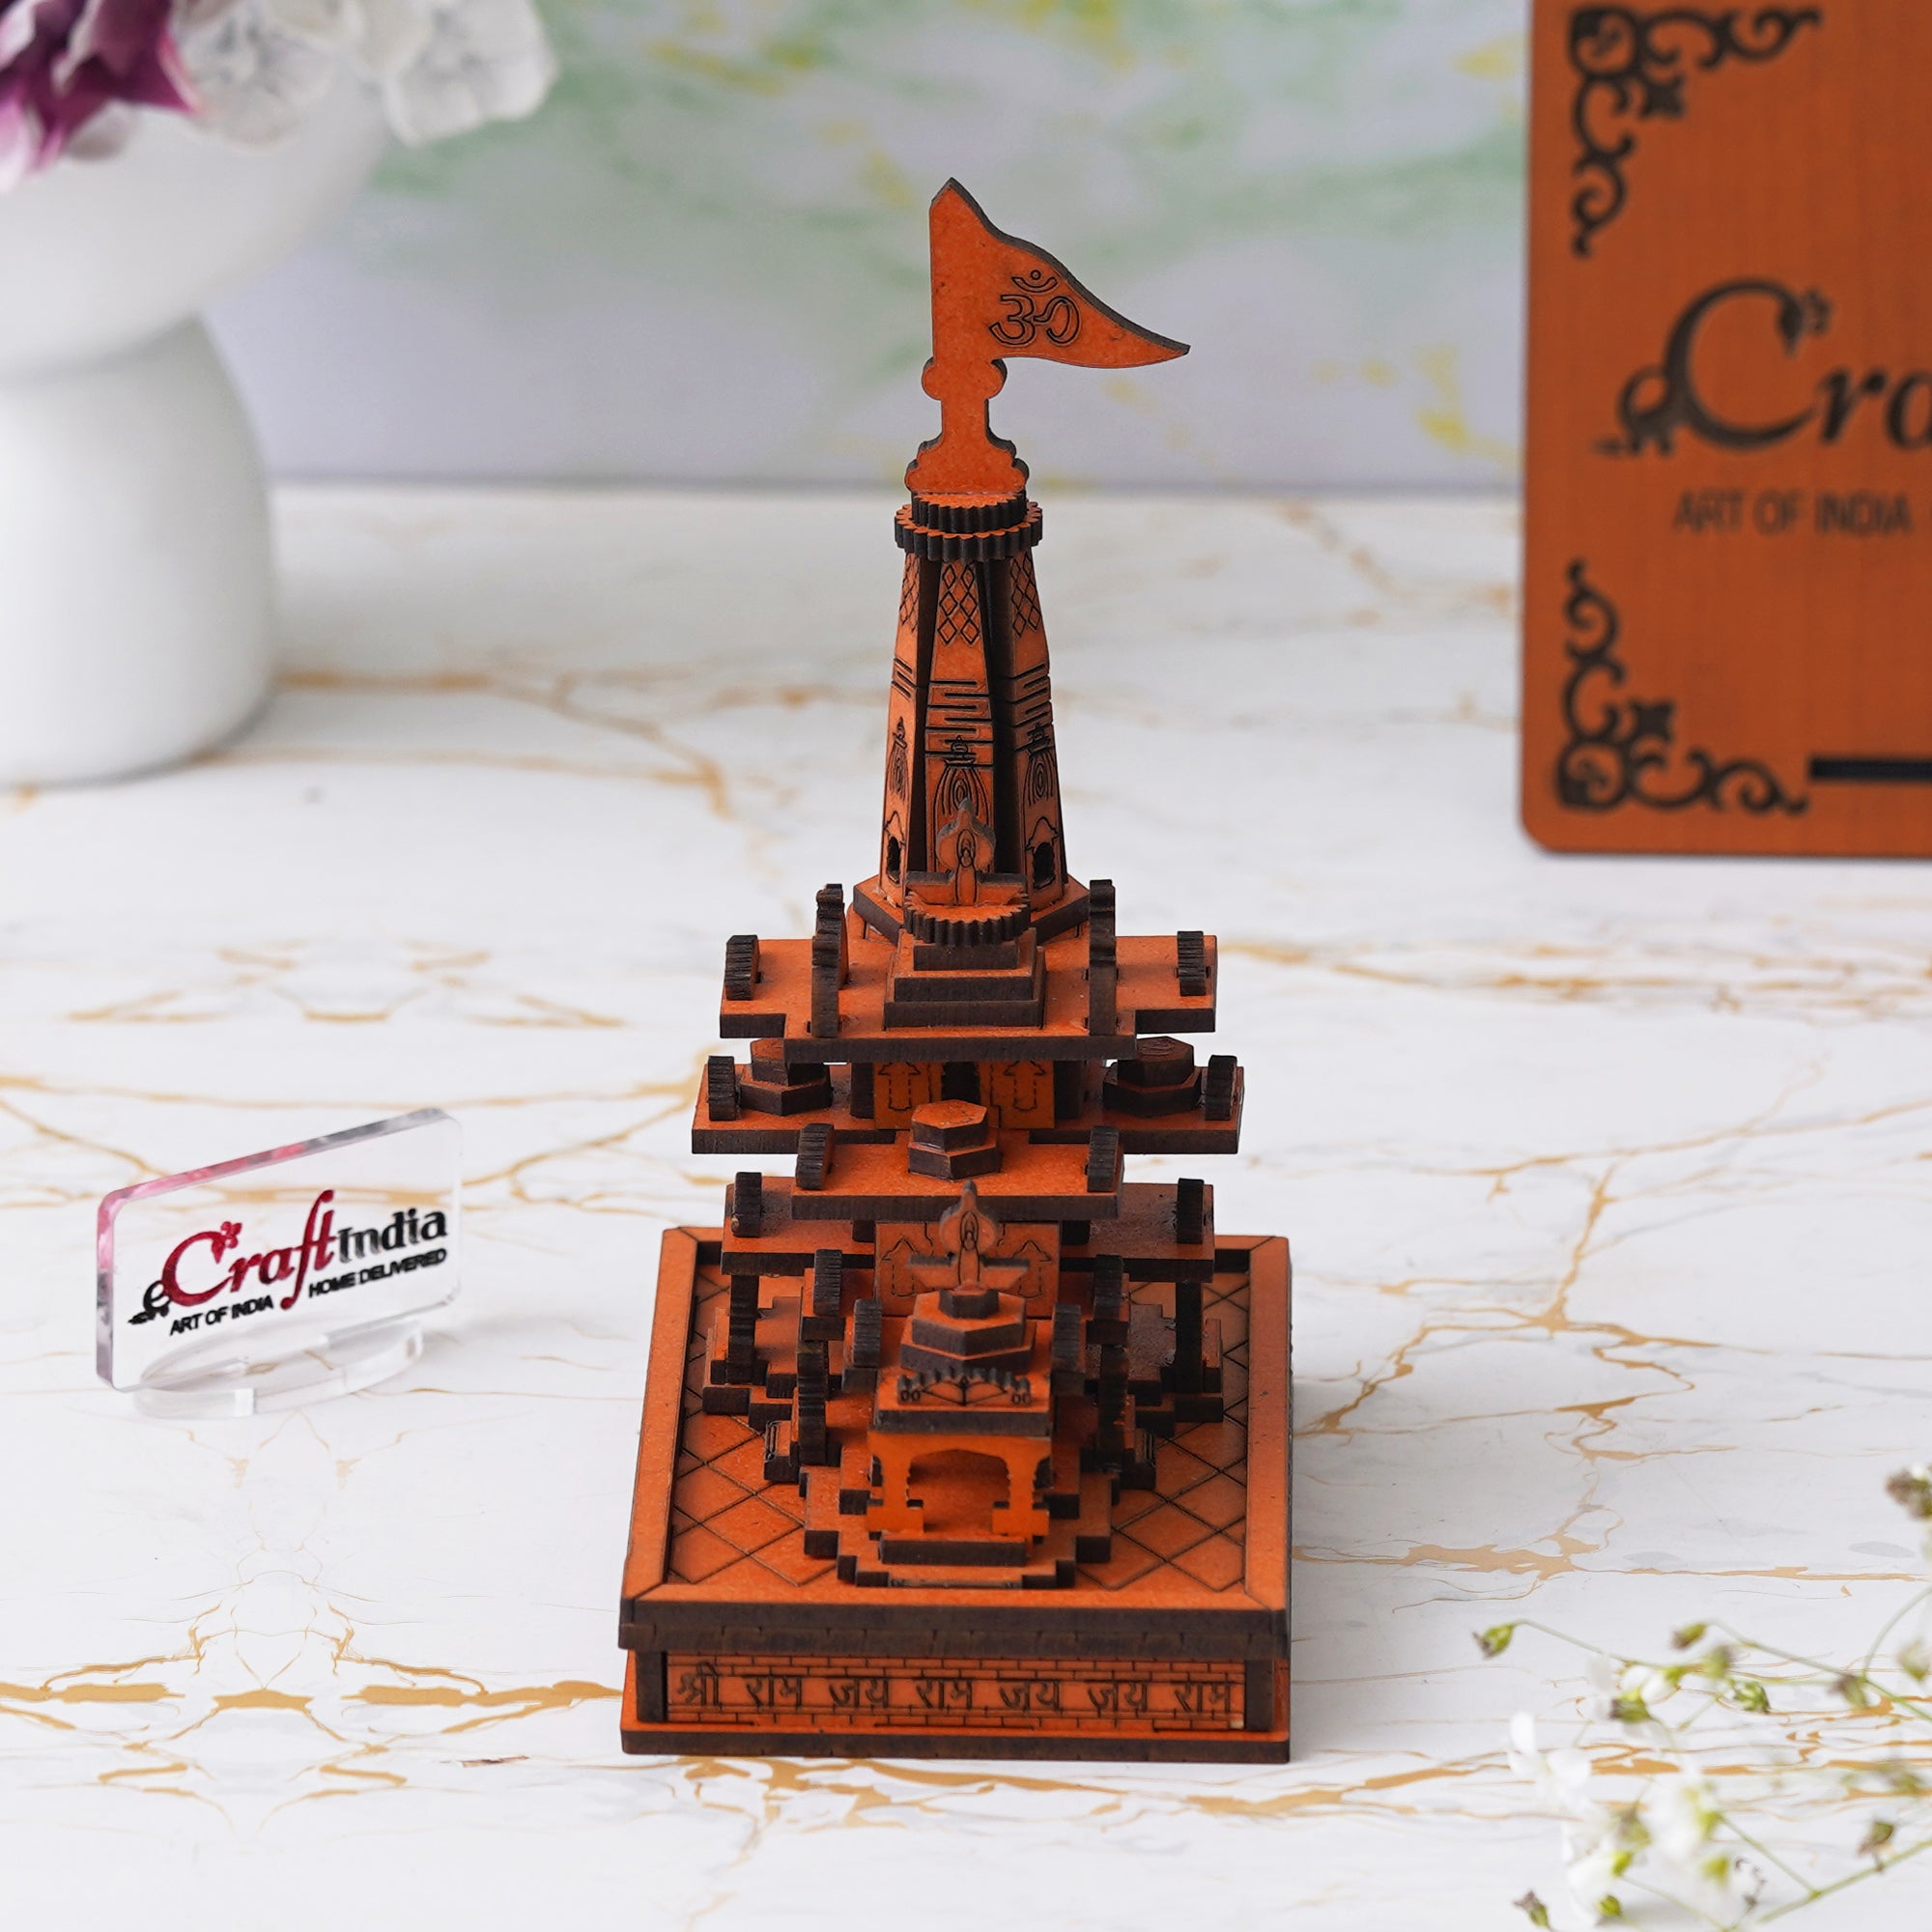 eCraftIndia Shri Ram Mandir Ayodhya Model - Wooden MDF Craftsmanship Authentic Designer Temple - Ideal for Home Temple, Decor, and Spiritual Gifting (Orange, Brown) 5